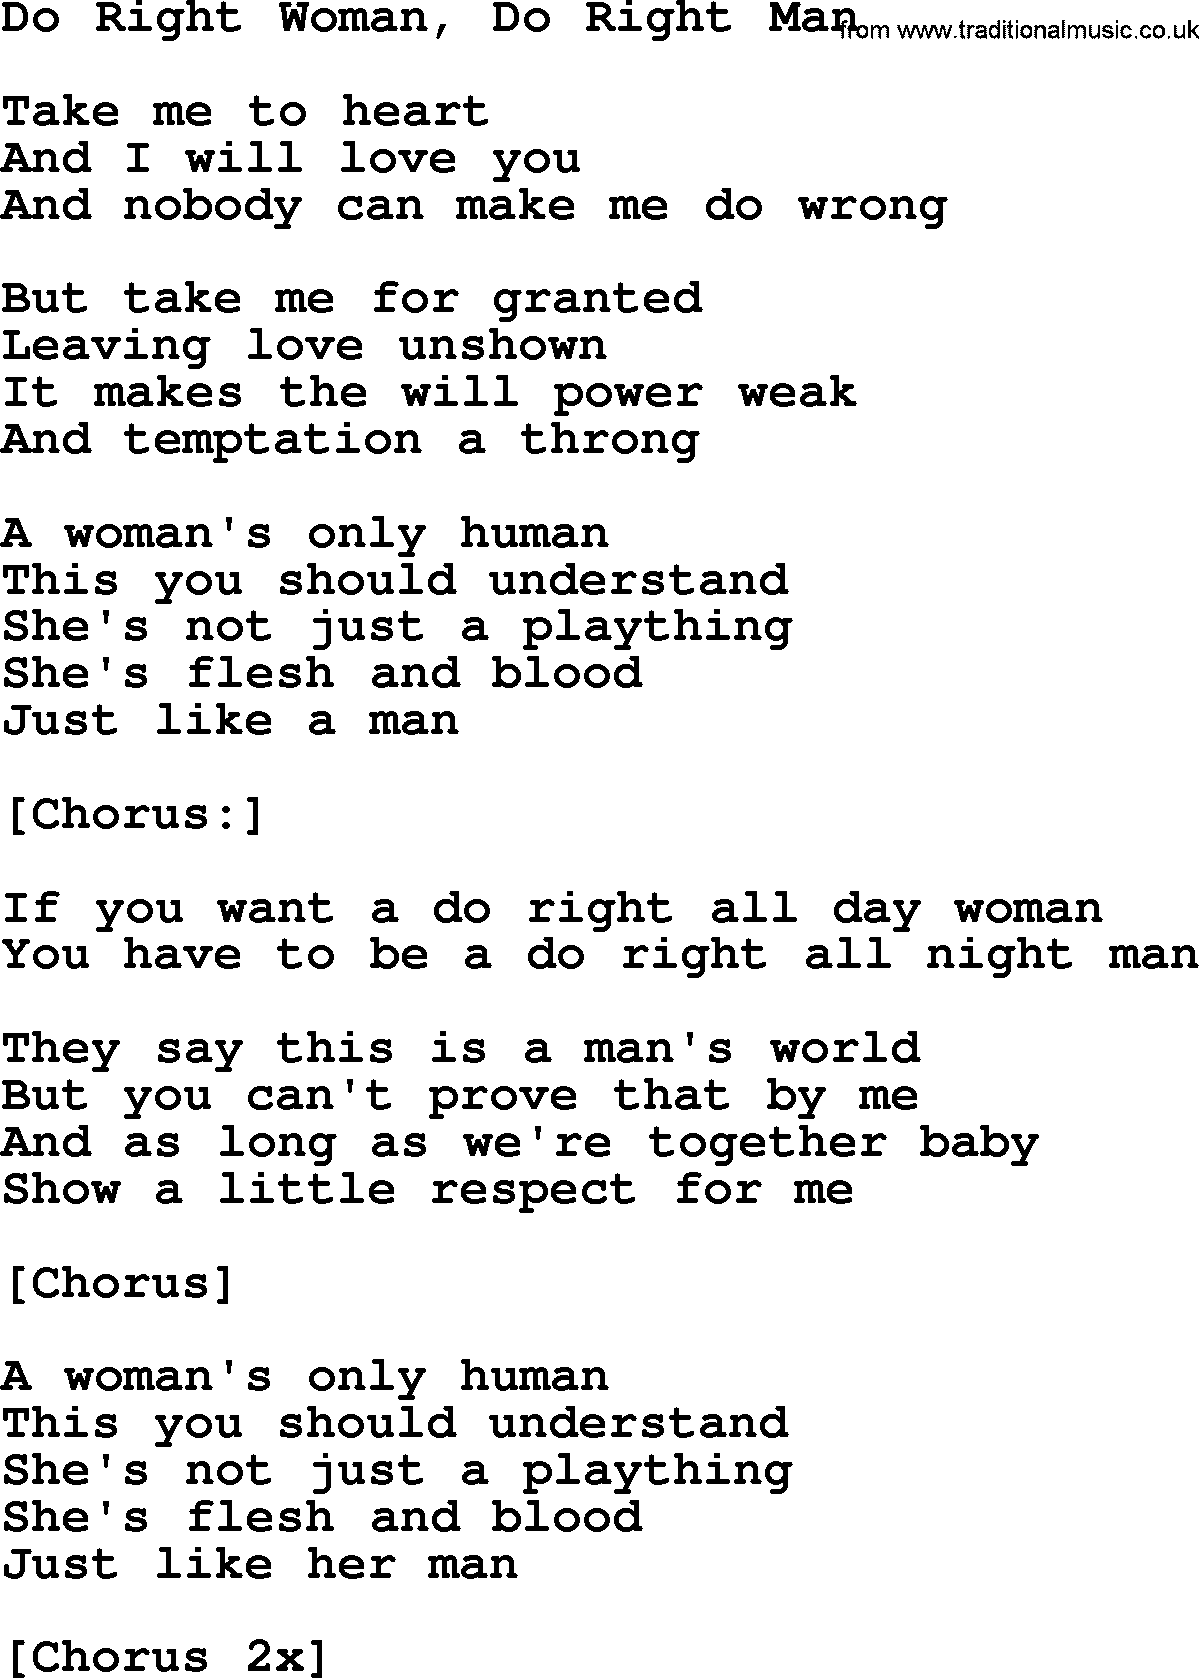 Joan Baez song Do Right Woman, Do Right Man, lyrics